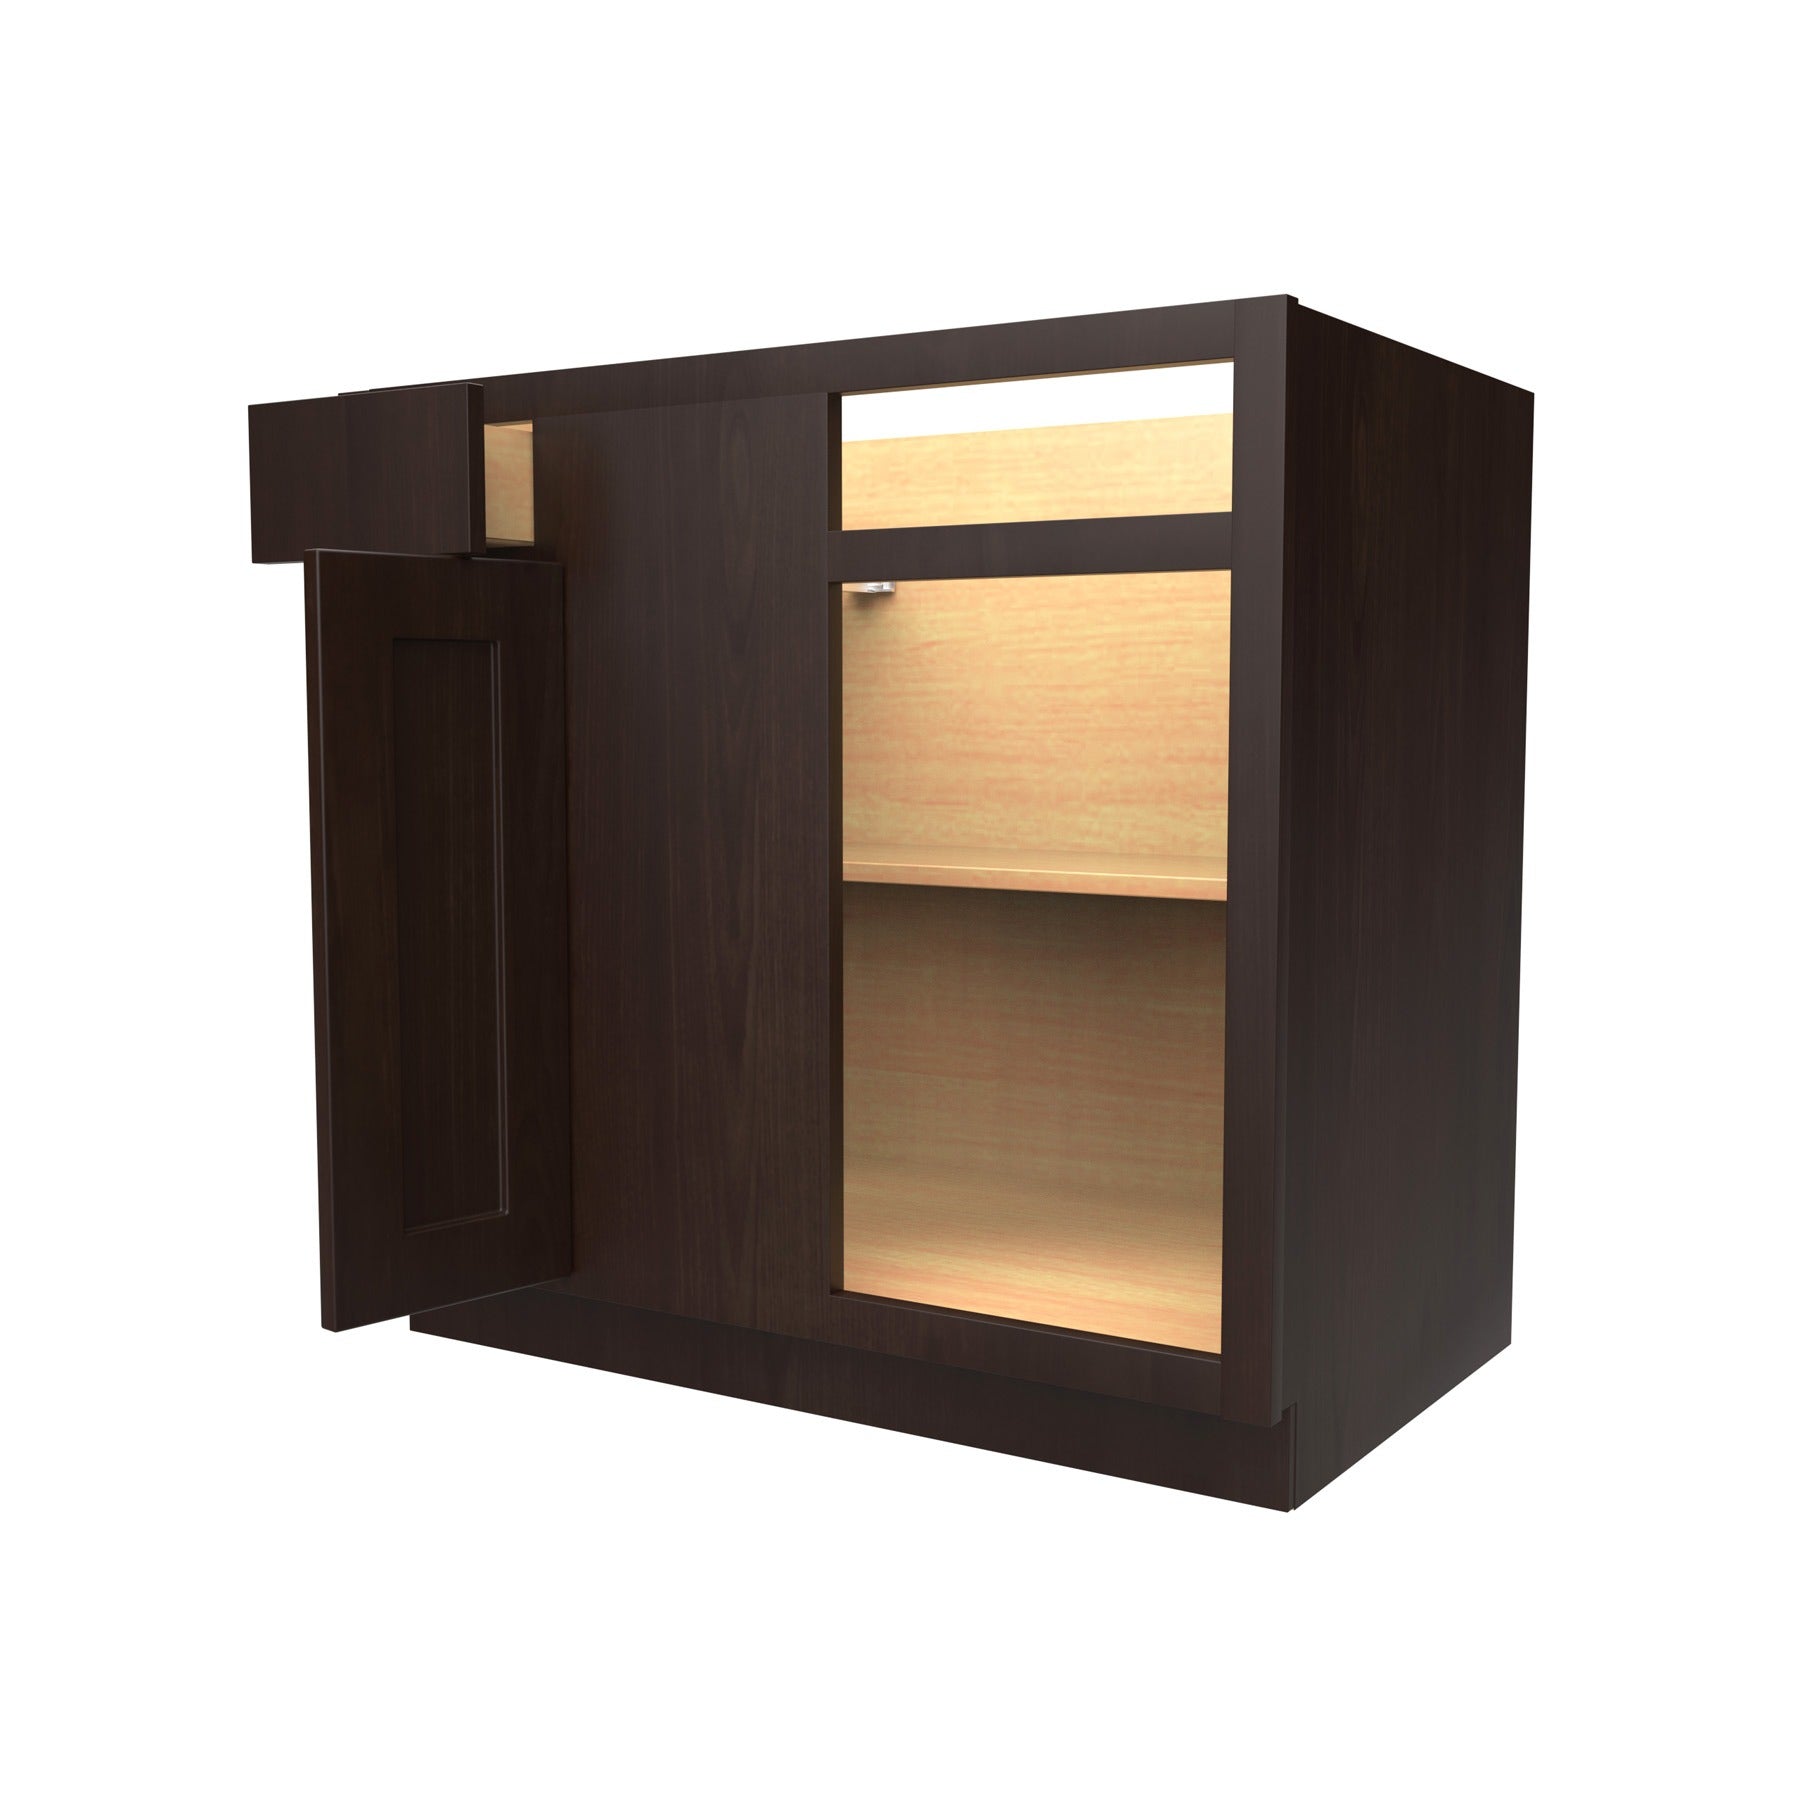 Blind Base Cabinet | 27"W x 34.5"H x 24"D - RTA Luxor Espresso